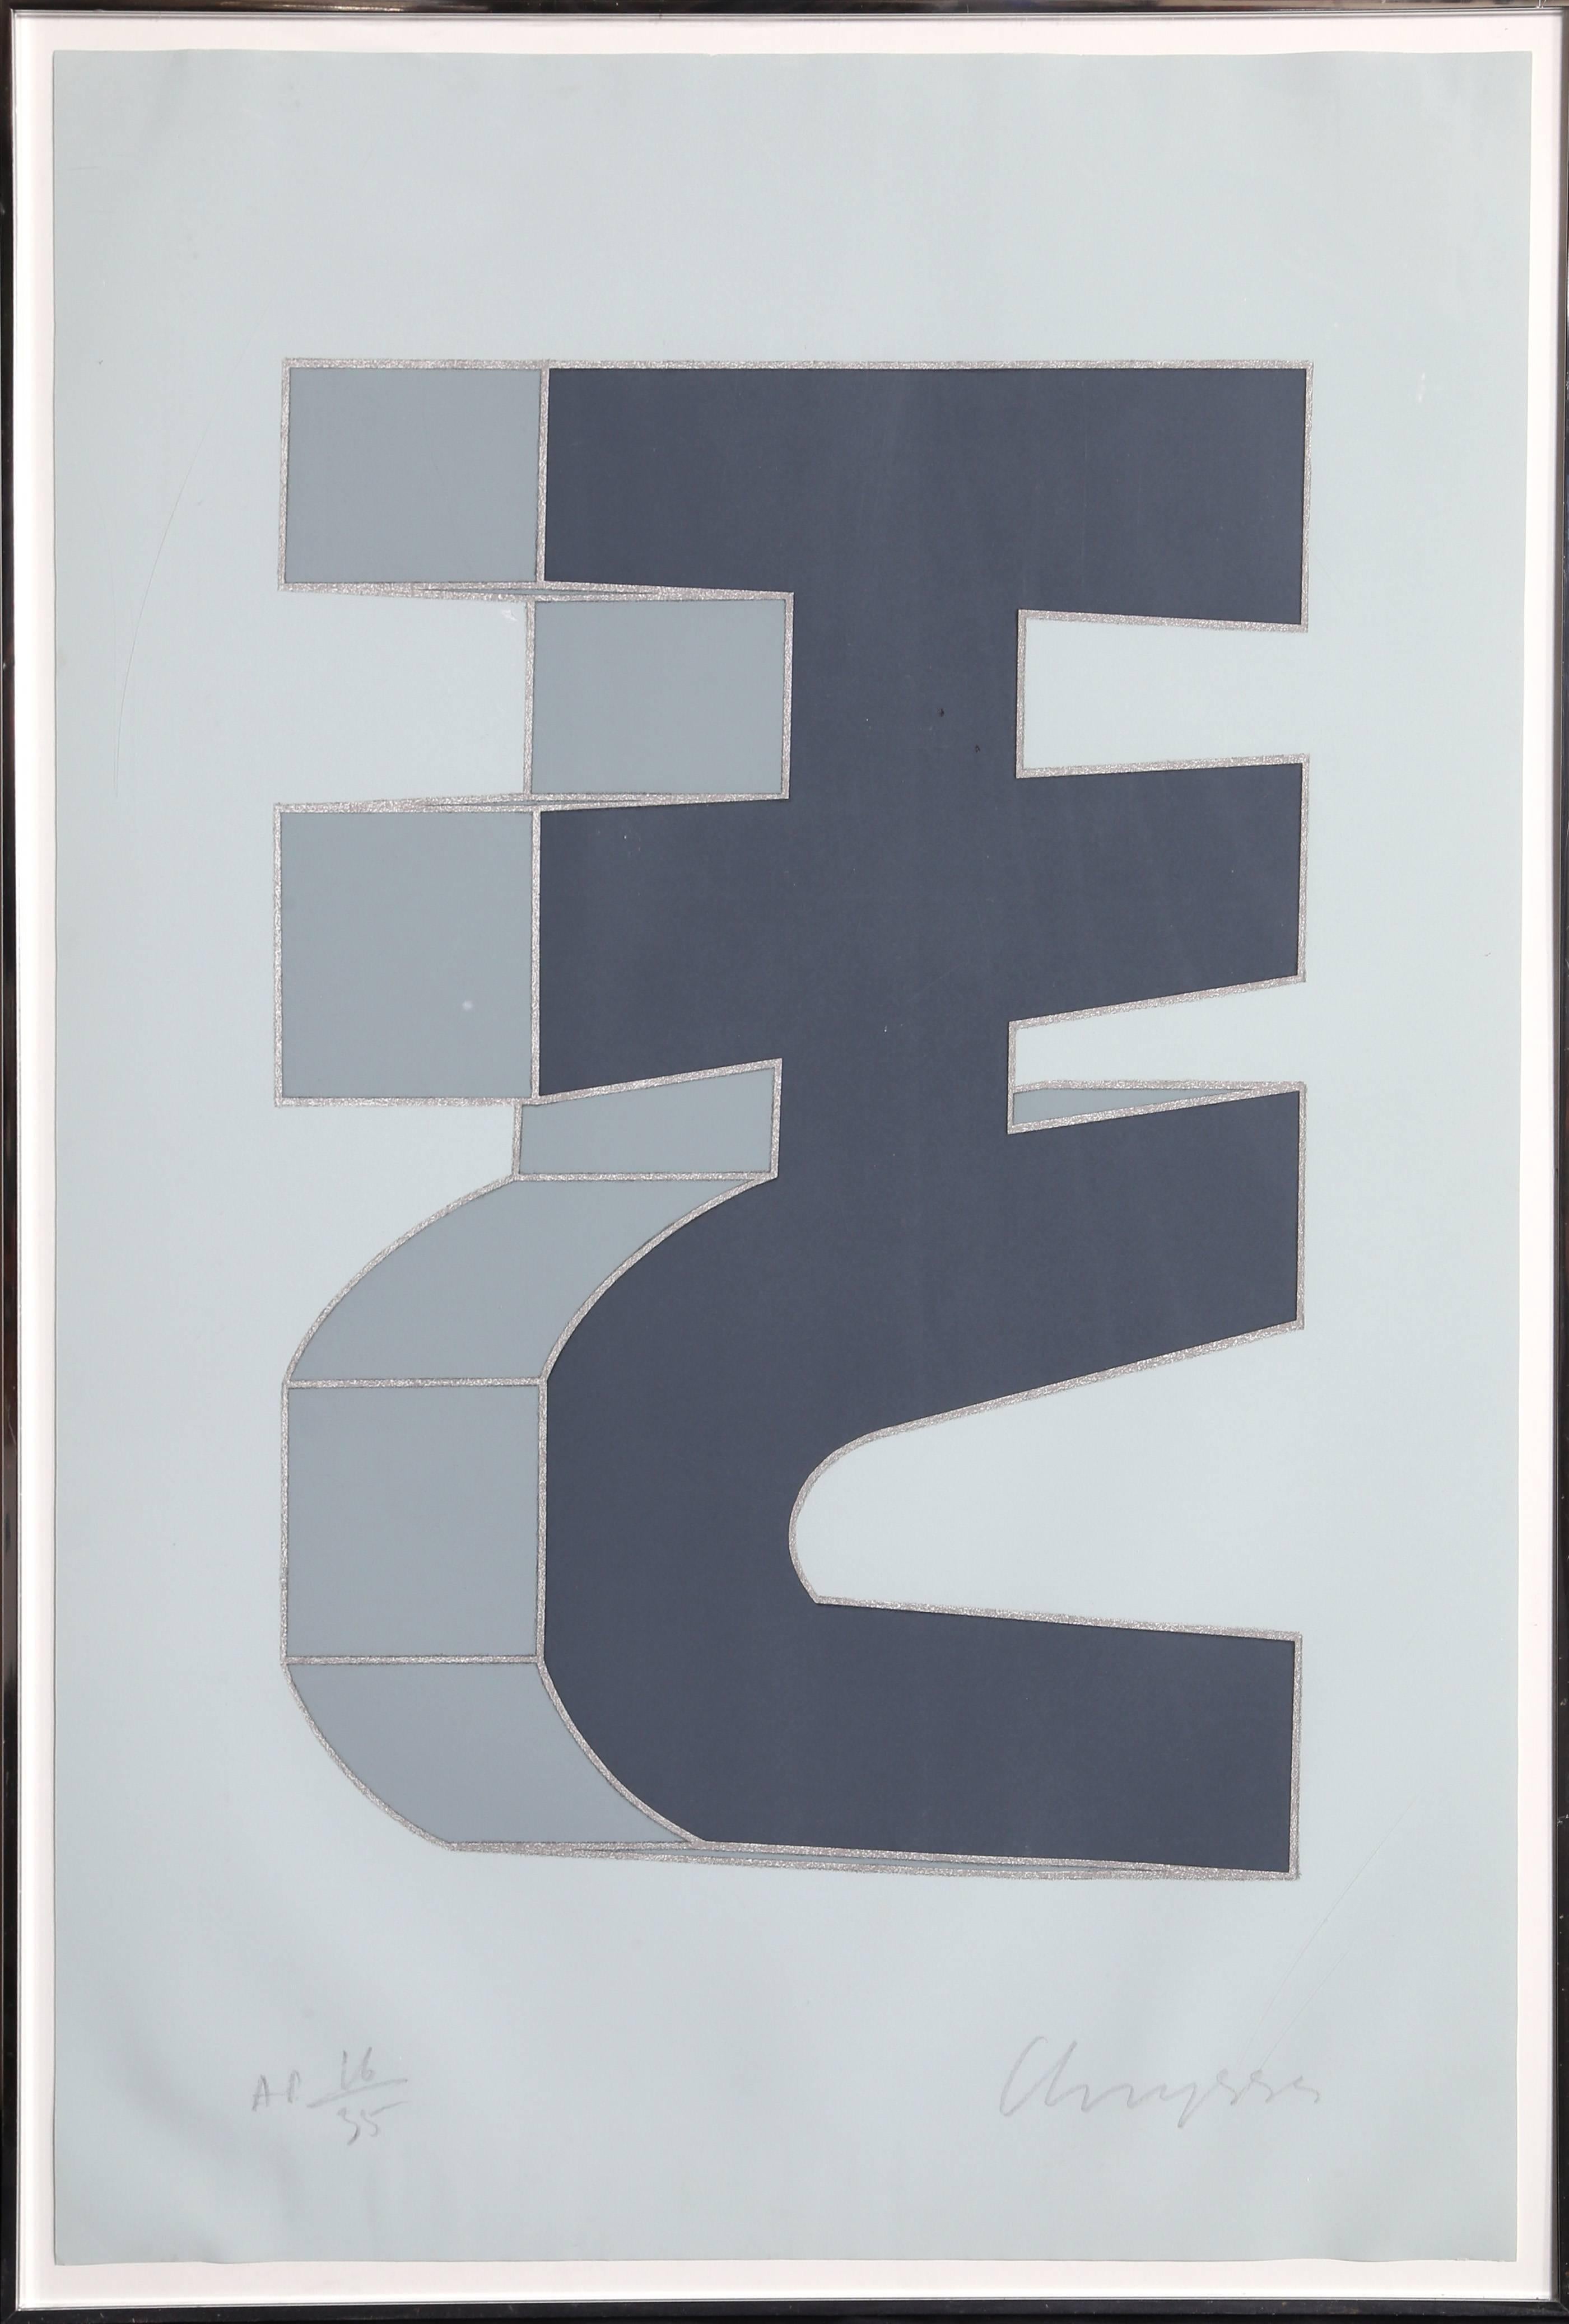 Abstract Print Chryssa Vardea-Mavromichali - Fragment de Times Square 6